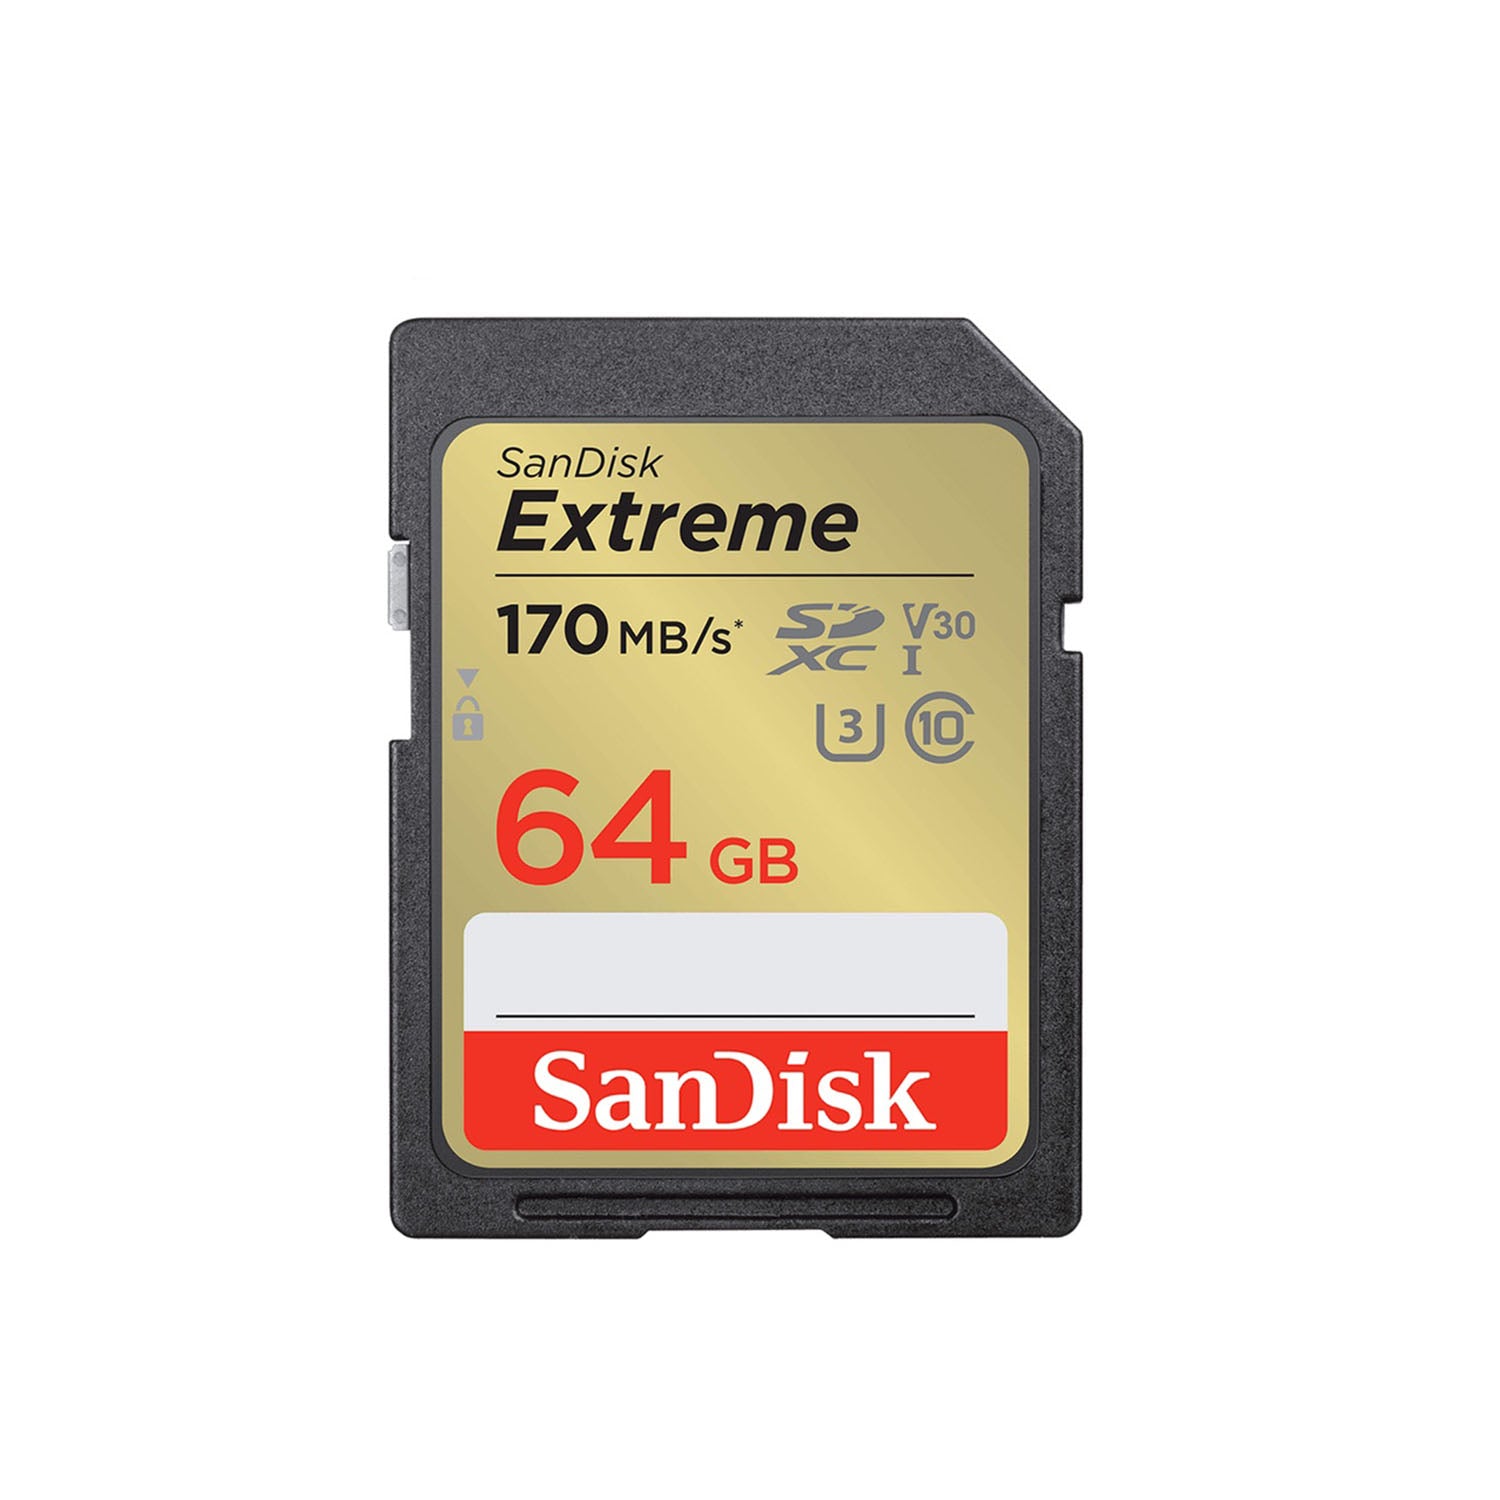 Sandisk Extreme SDXC UHS-I Card 64GB (170mbps)